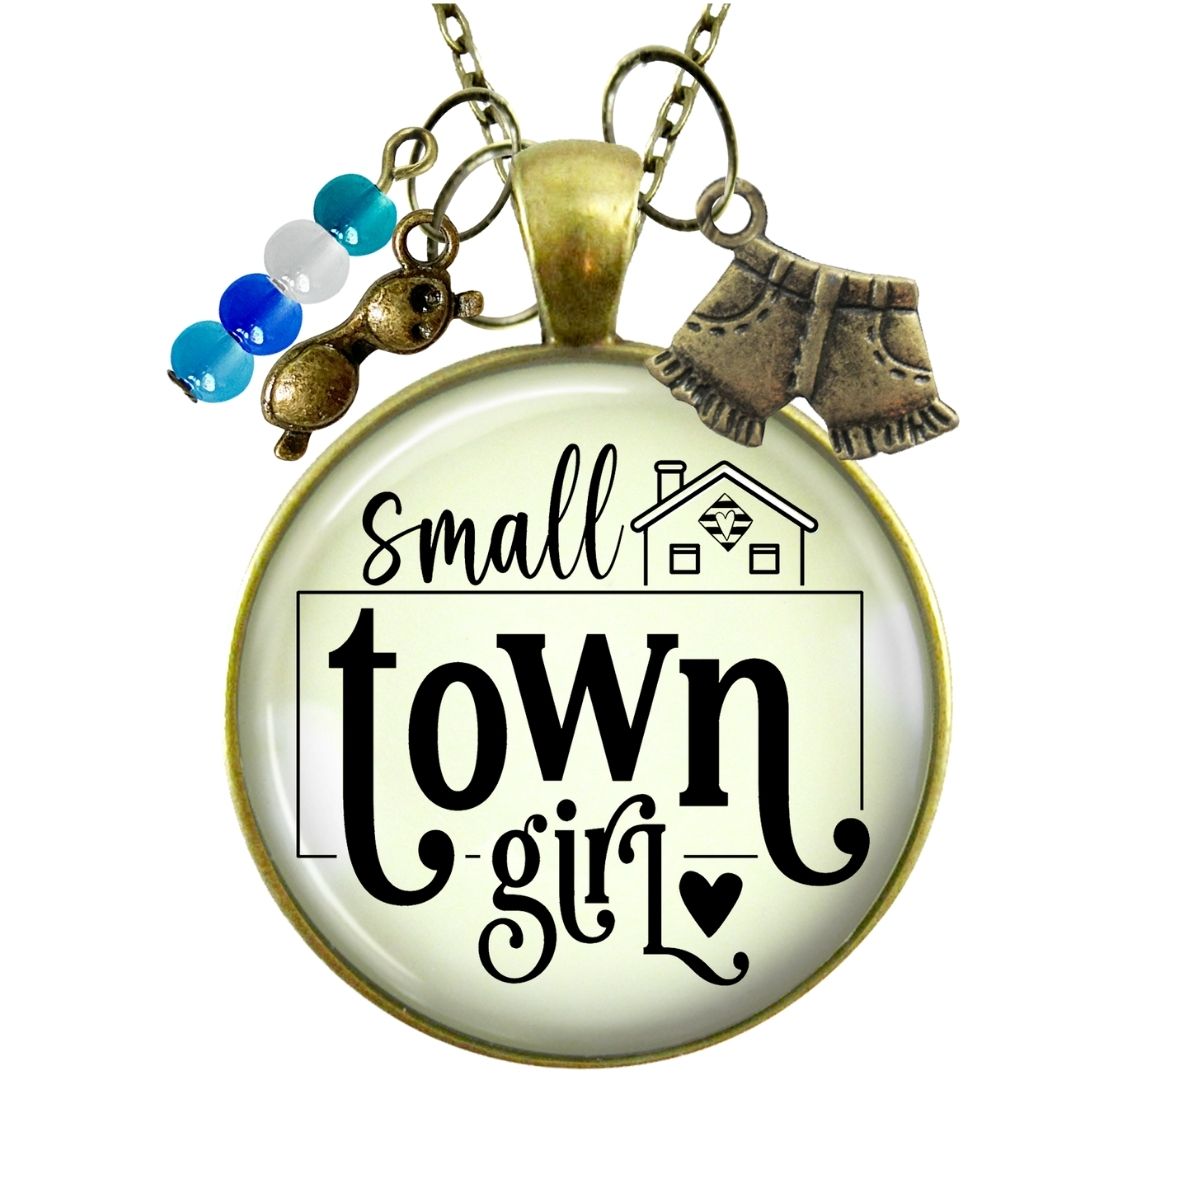 Handmade Gutsy Goodness Jewelry Small Town Girl Necklace Boho Handmade Fashion Jewelry Denim Shorts & Sunglasses Charms Message Card